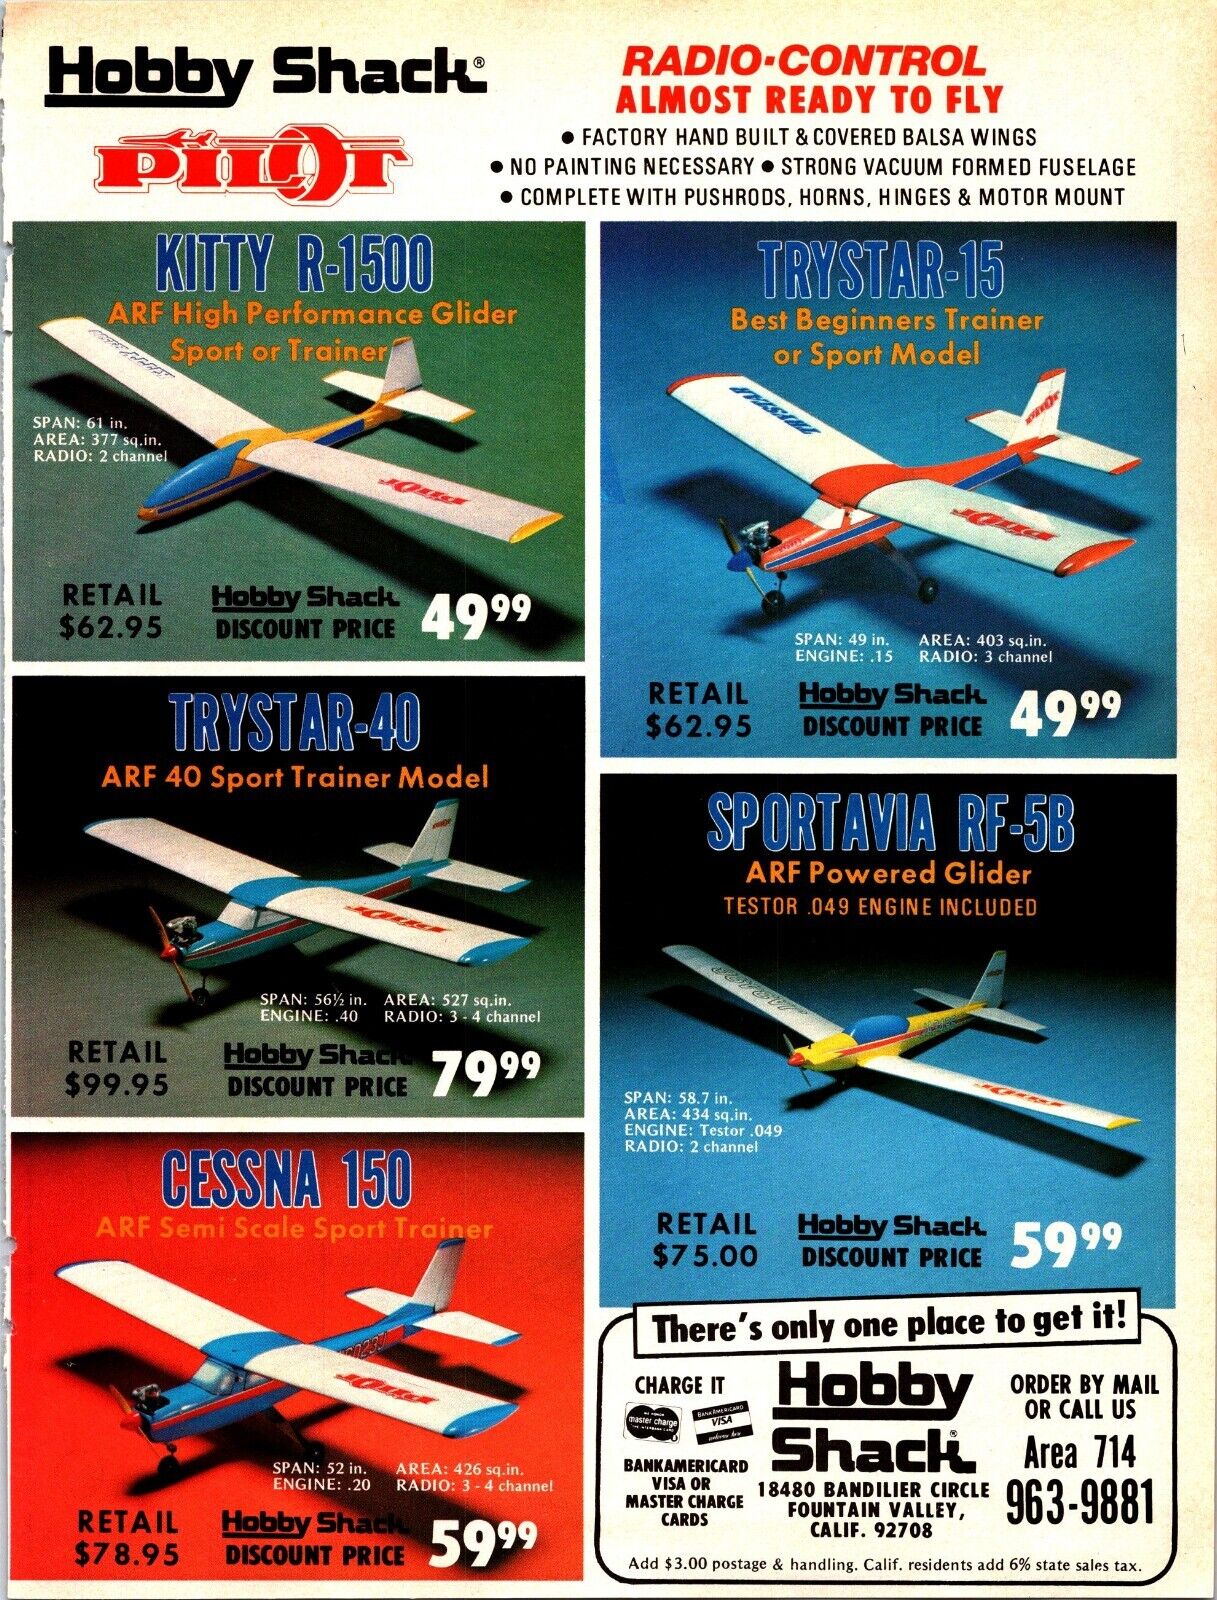 Pilot Kitty R 1500 RC ARF Kits Vintage Print Ad Hobby Shack 